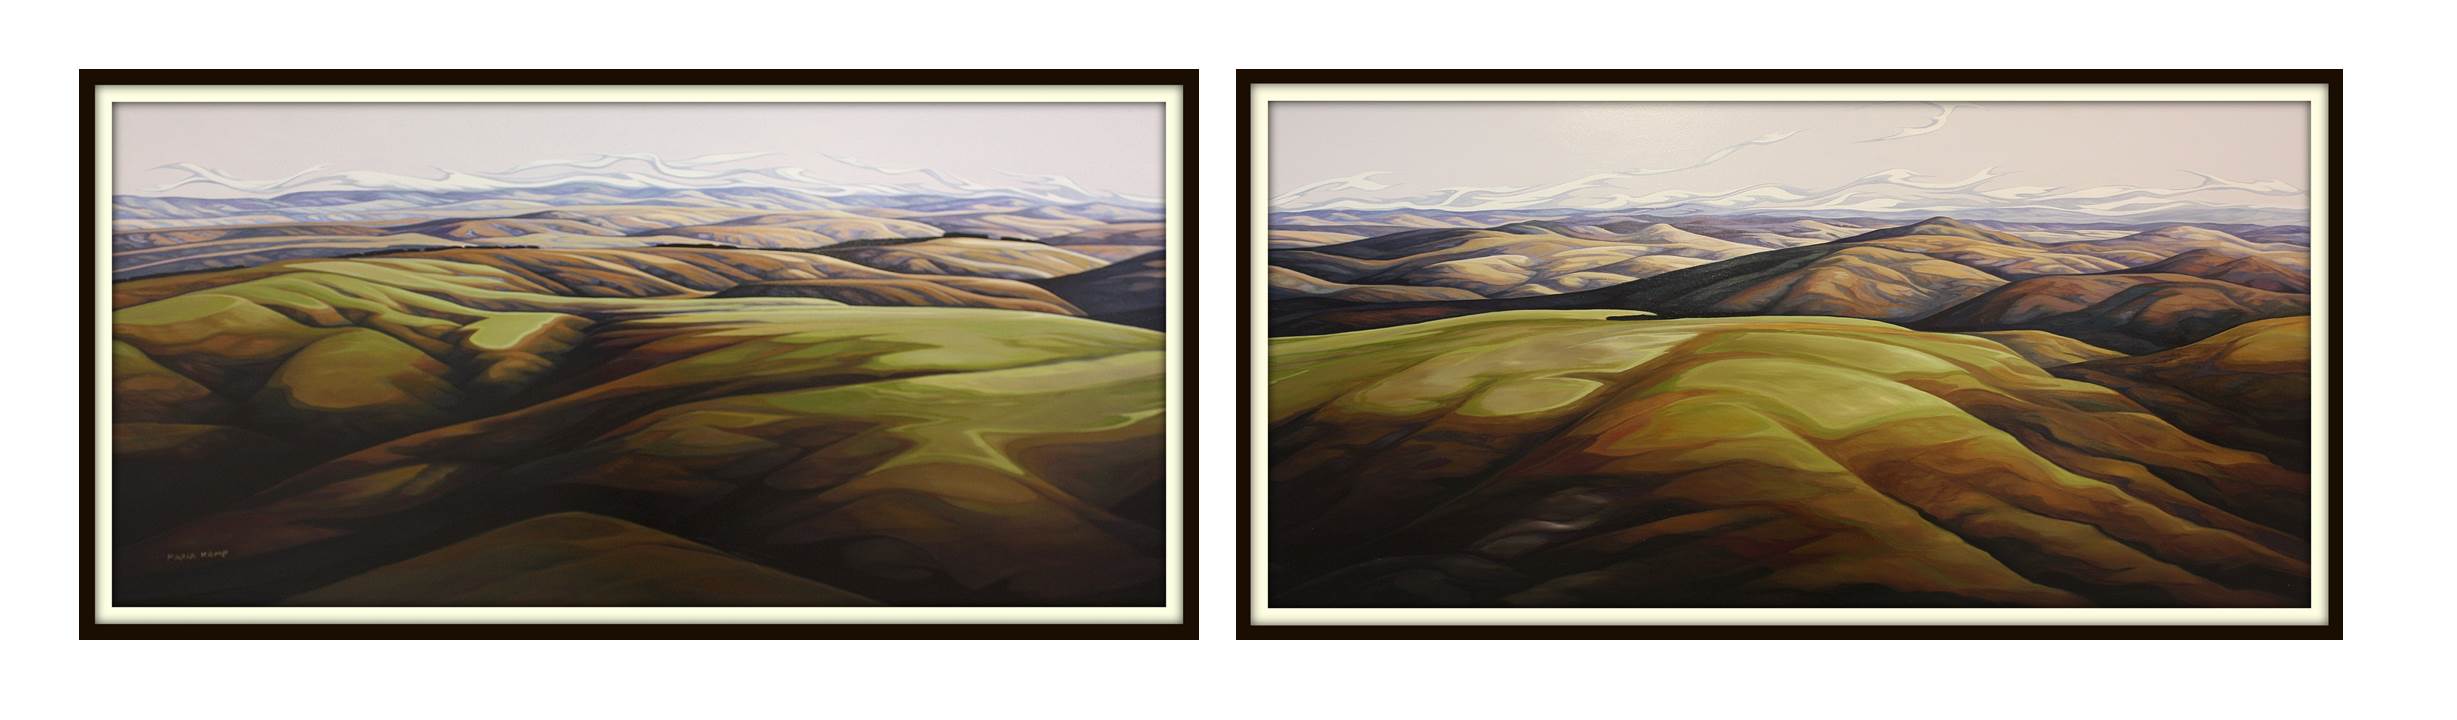 Maria Kemp, "Rugged Farmlands", Oil on Board, Archival Framed, 1320 x 720mm each, Diptych, 2019